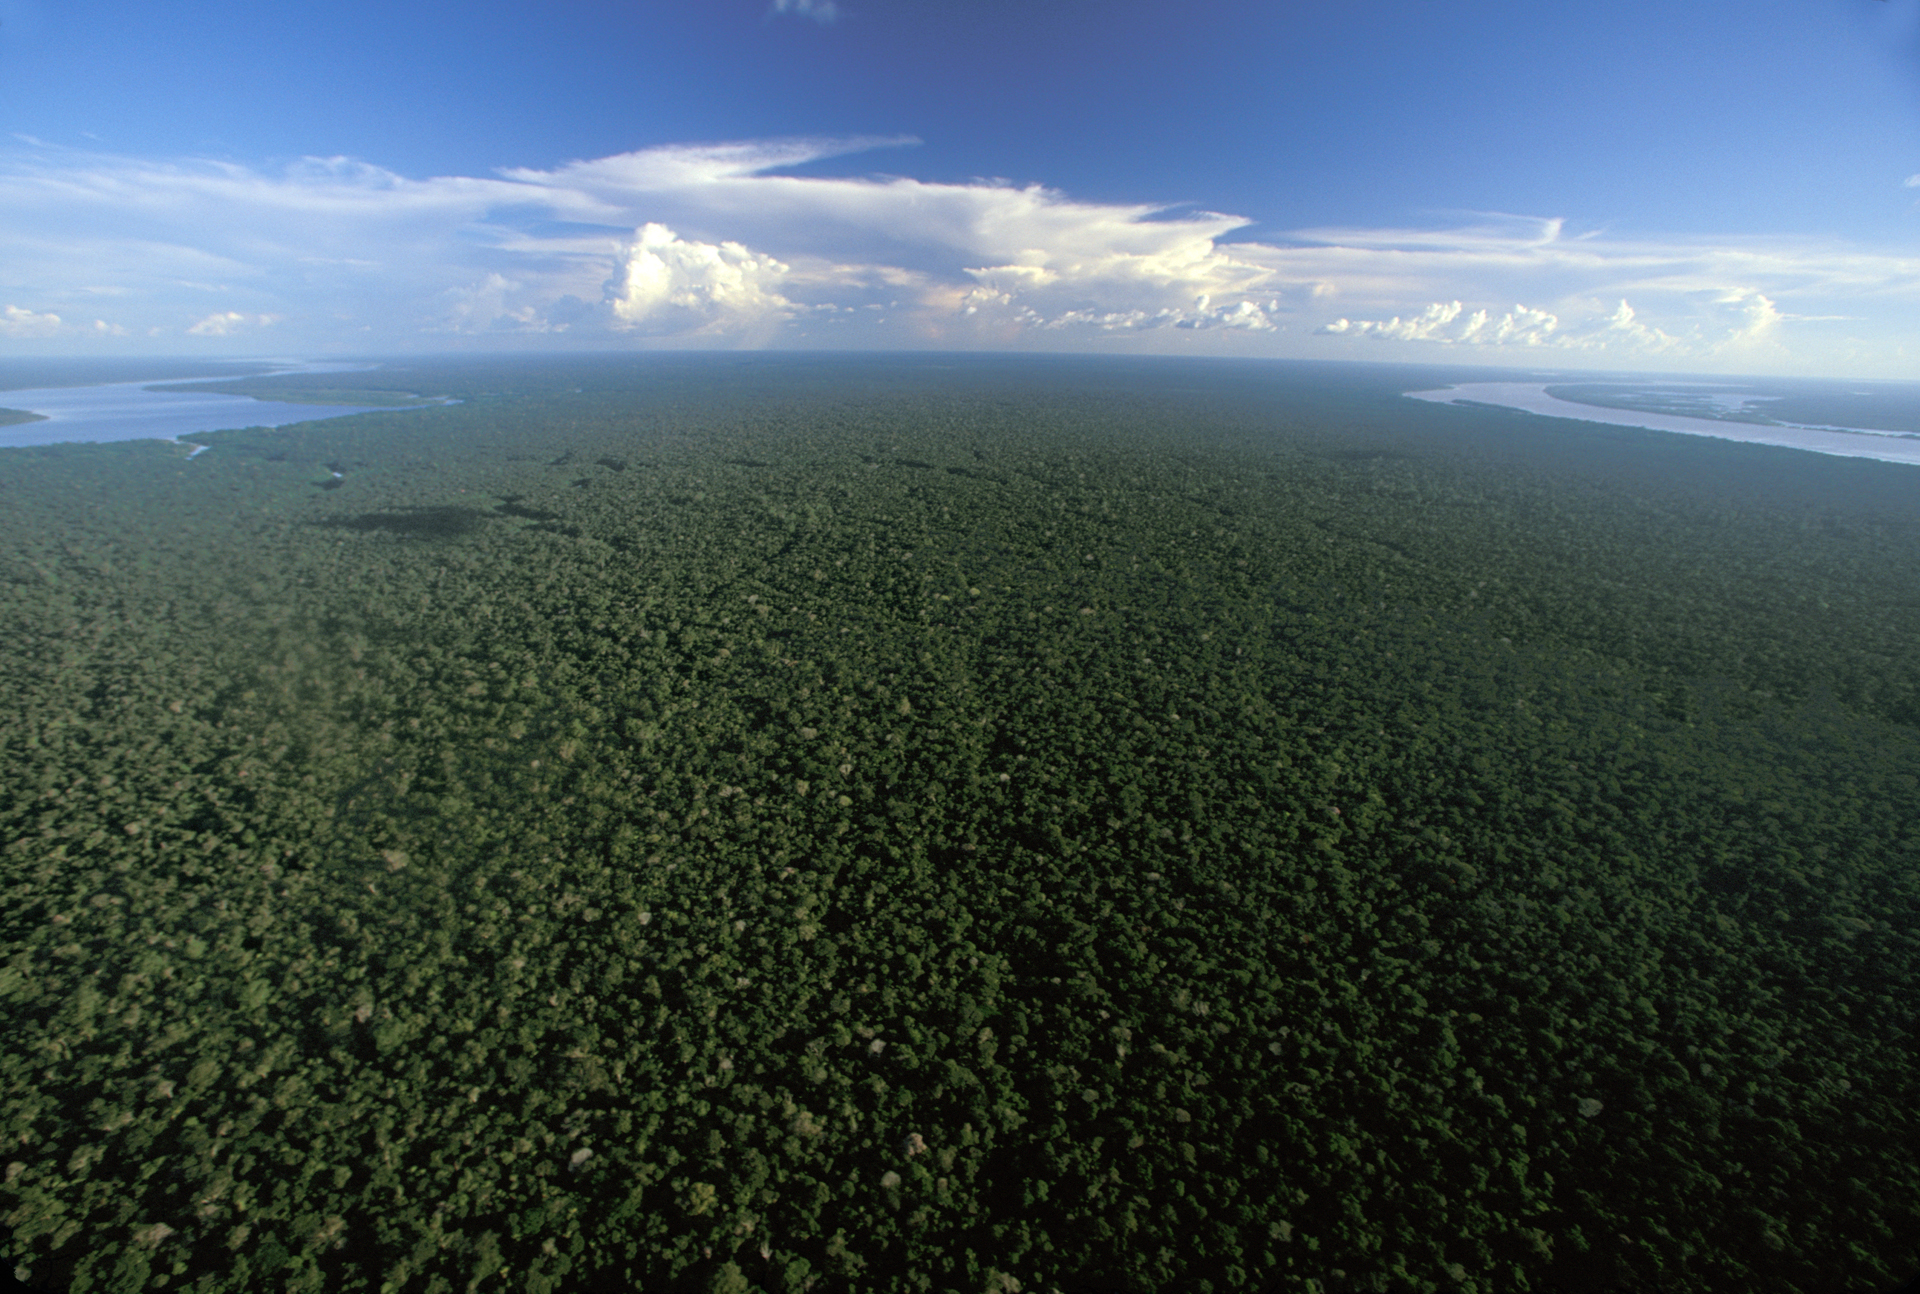  Aerial view of the Amazon Rainforest near Nova Olinda between the Rio Madera and Rio Canuma rivers.  Nova Olinda, Brazil  